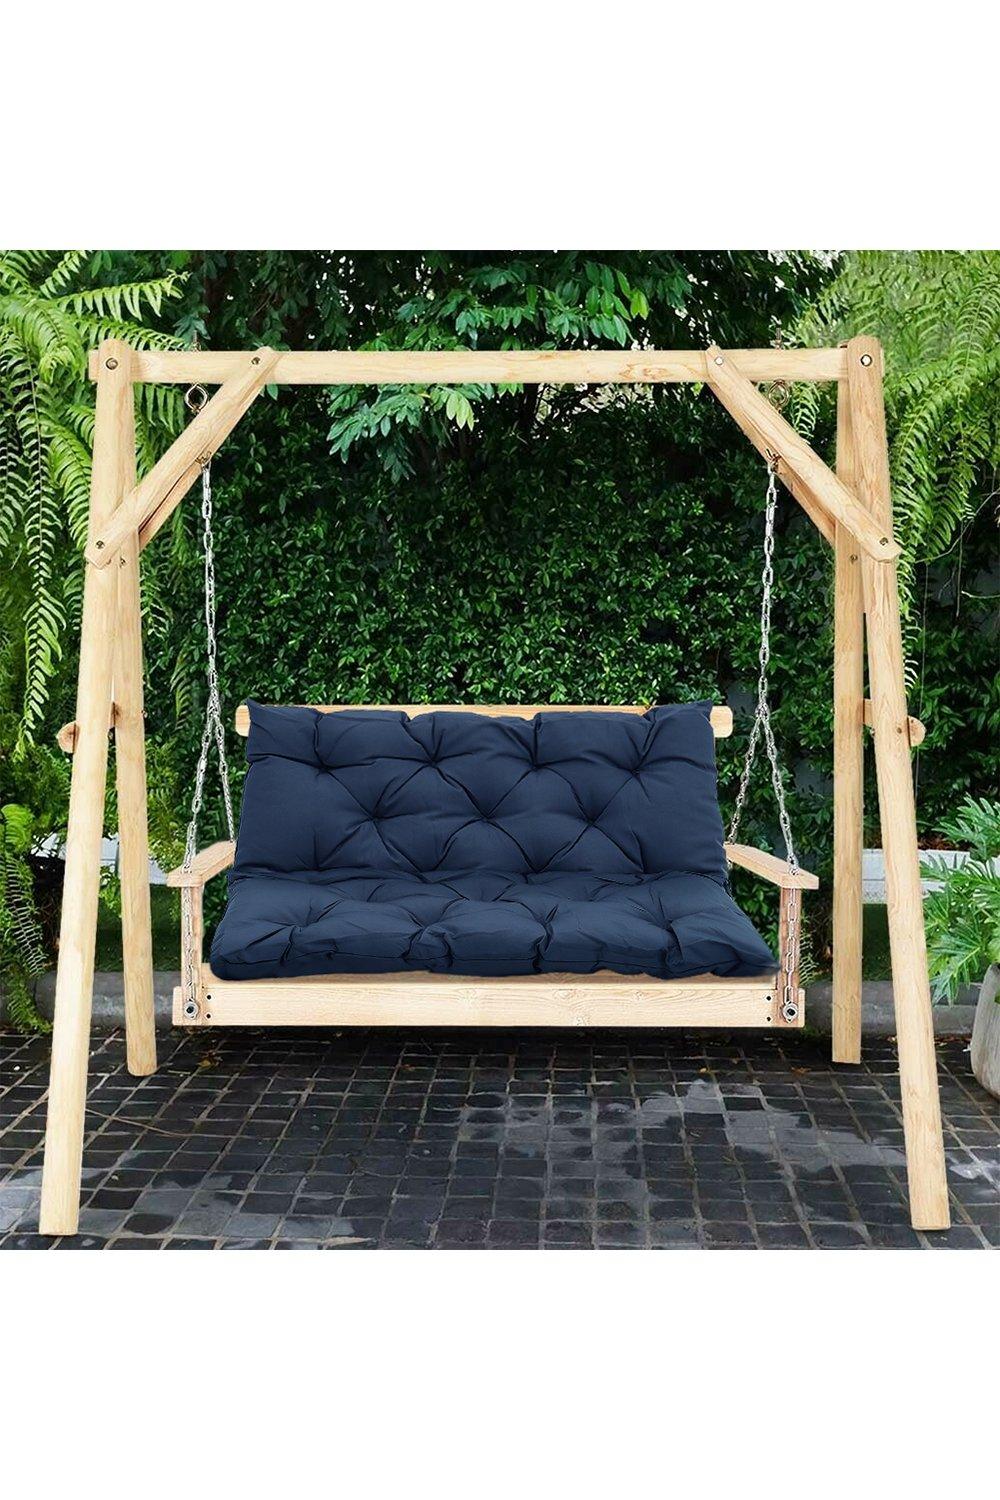 150cm W x 100cm D Outdoor Garden Chair Cushion with Anti-Slip Ties